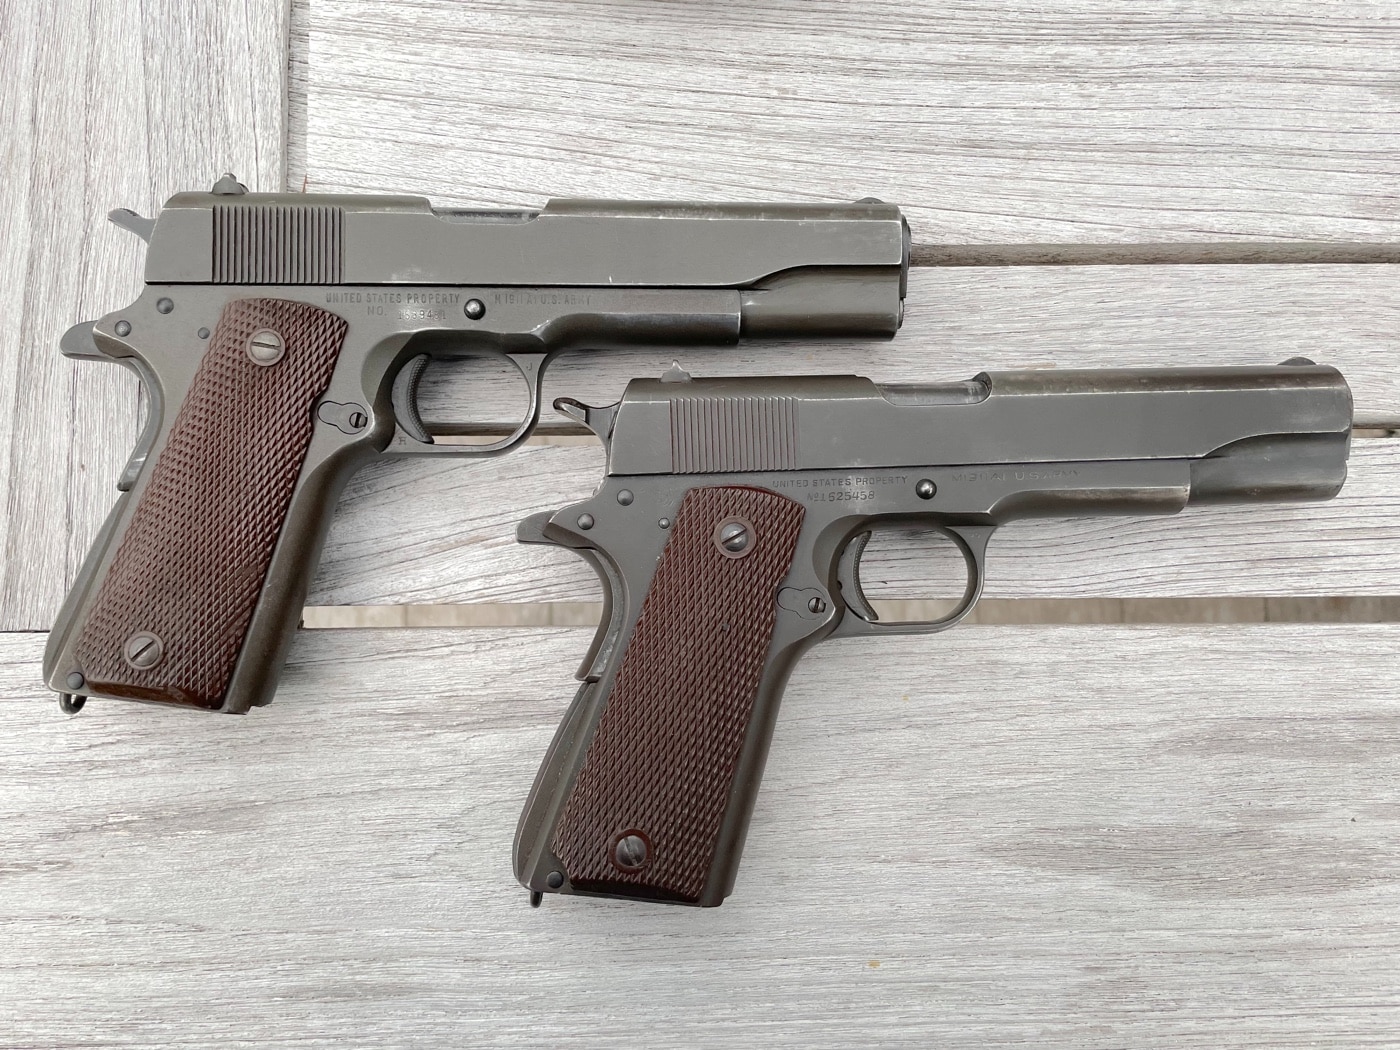 mil-spec mojo M1911A1 45 pistols from World War II